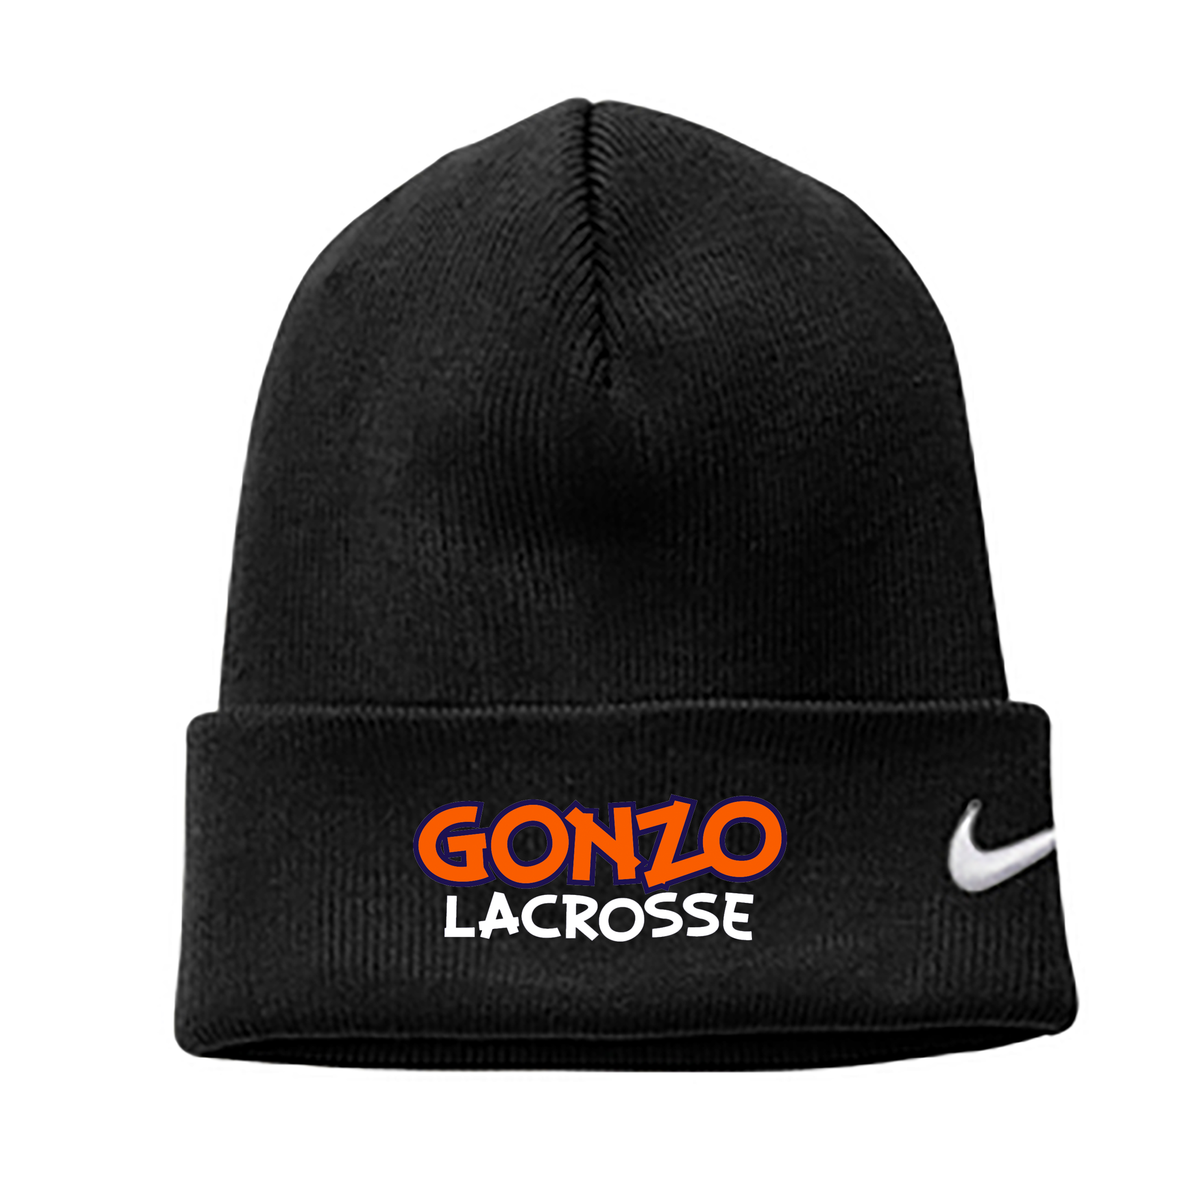 Gonzo Lacrosse Nike Beanie